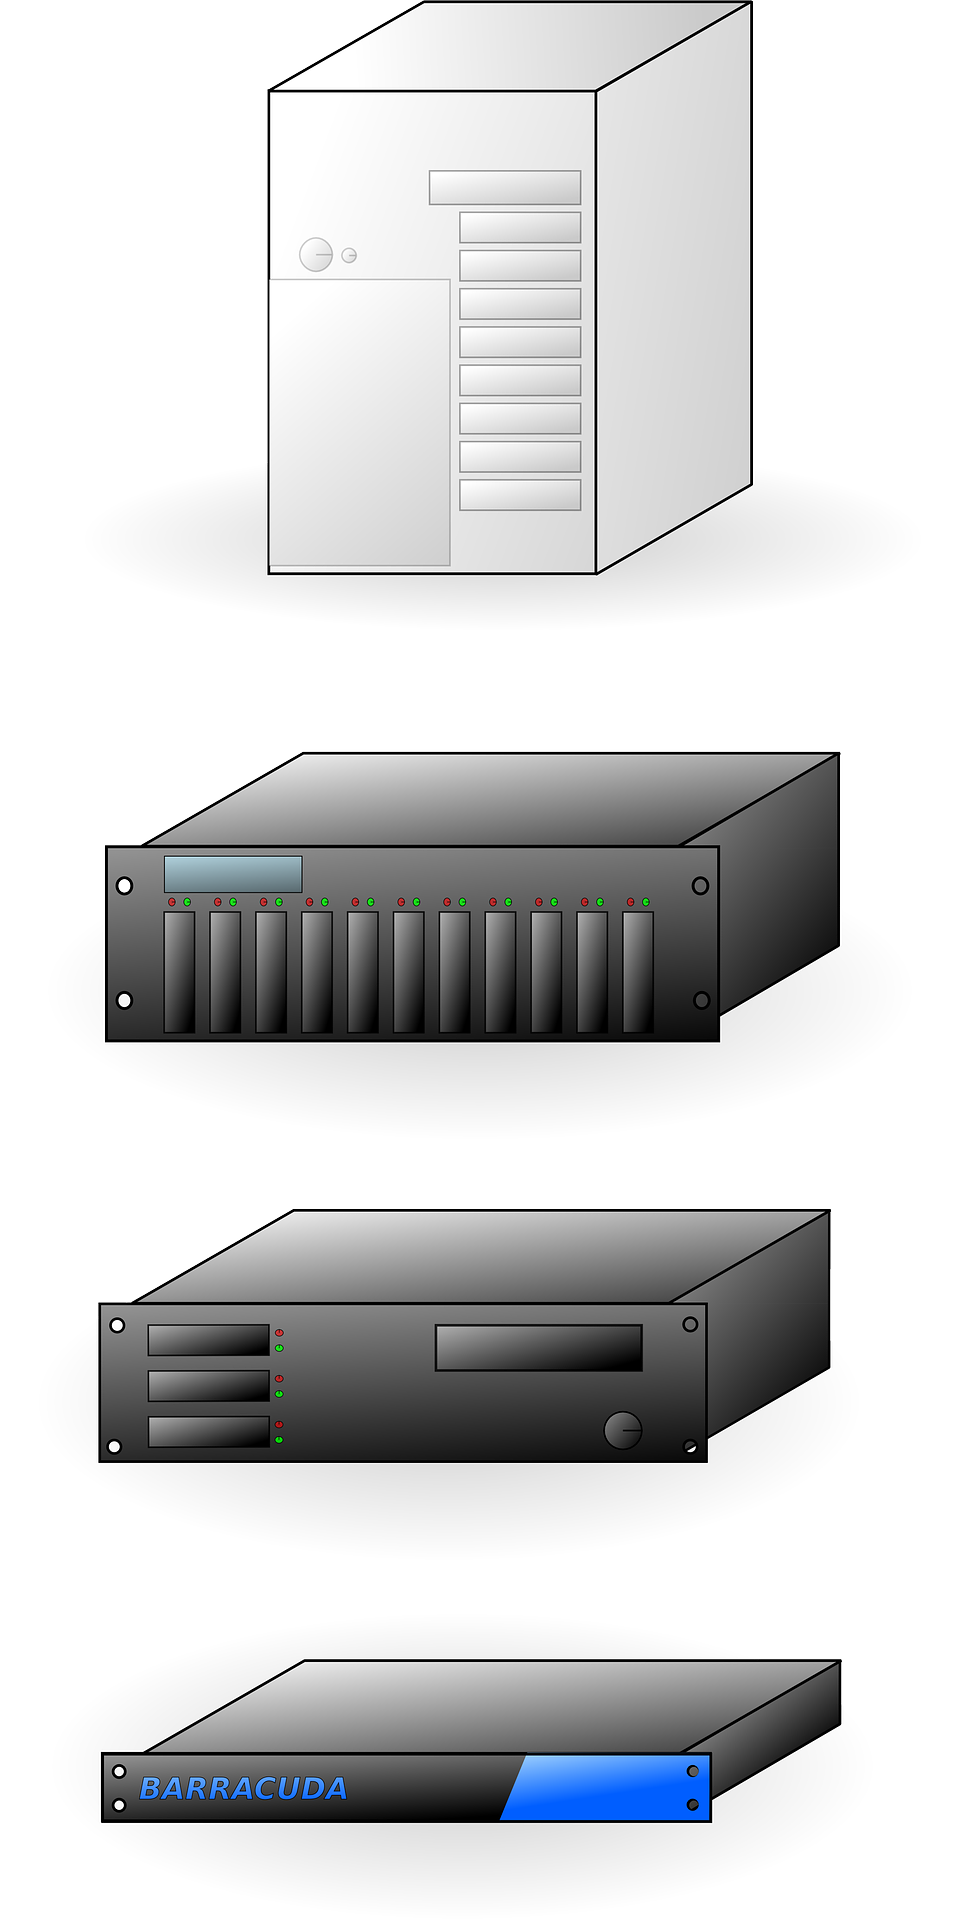 Server computer drawing free image download